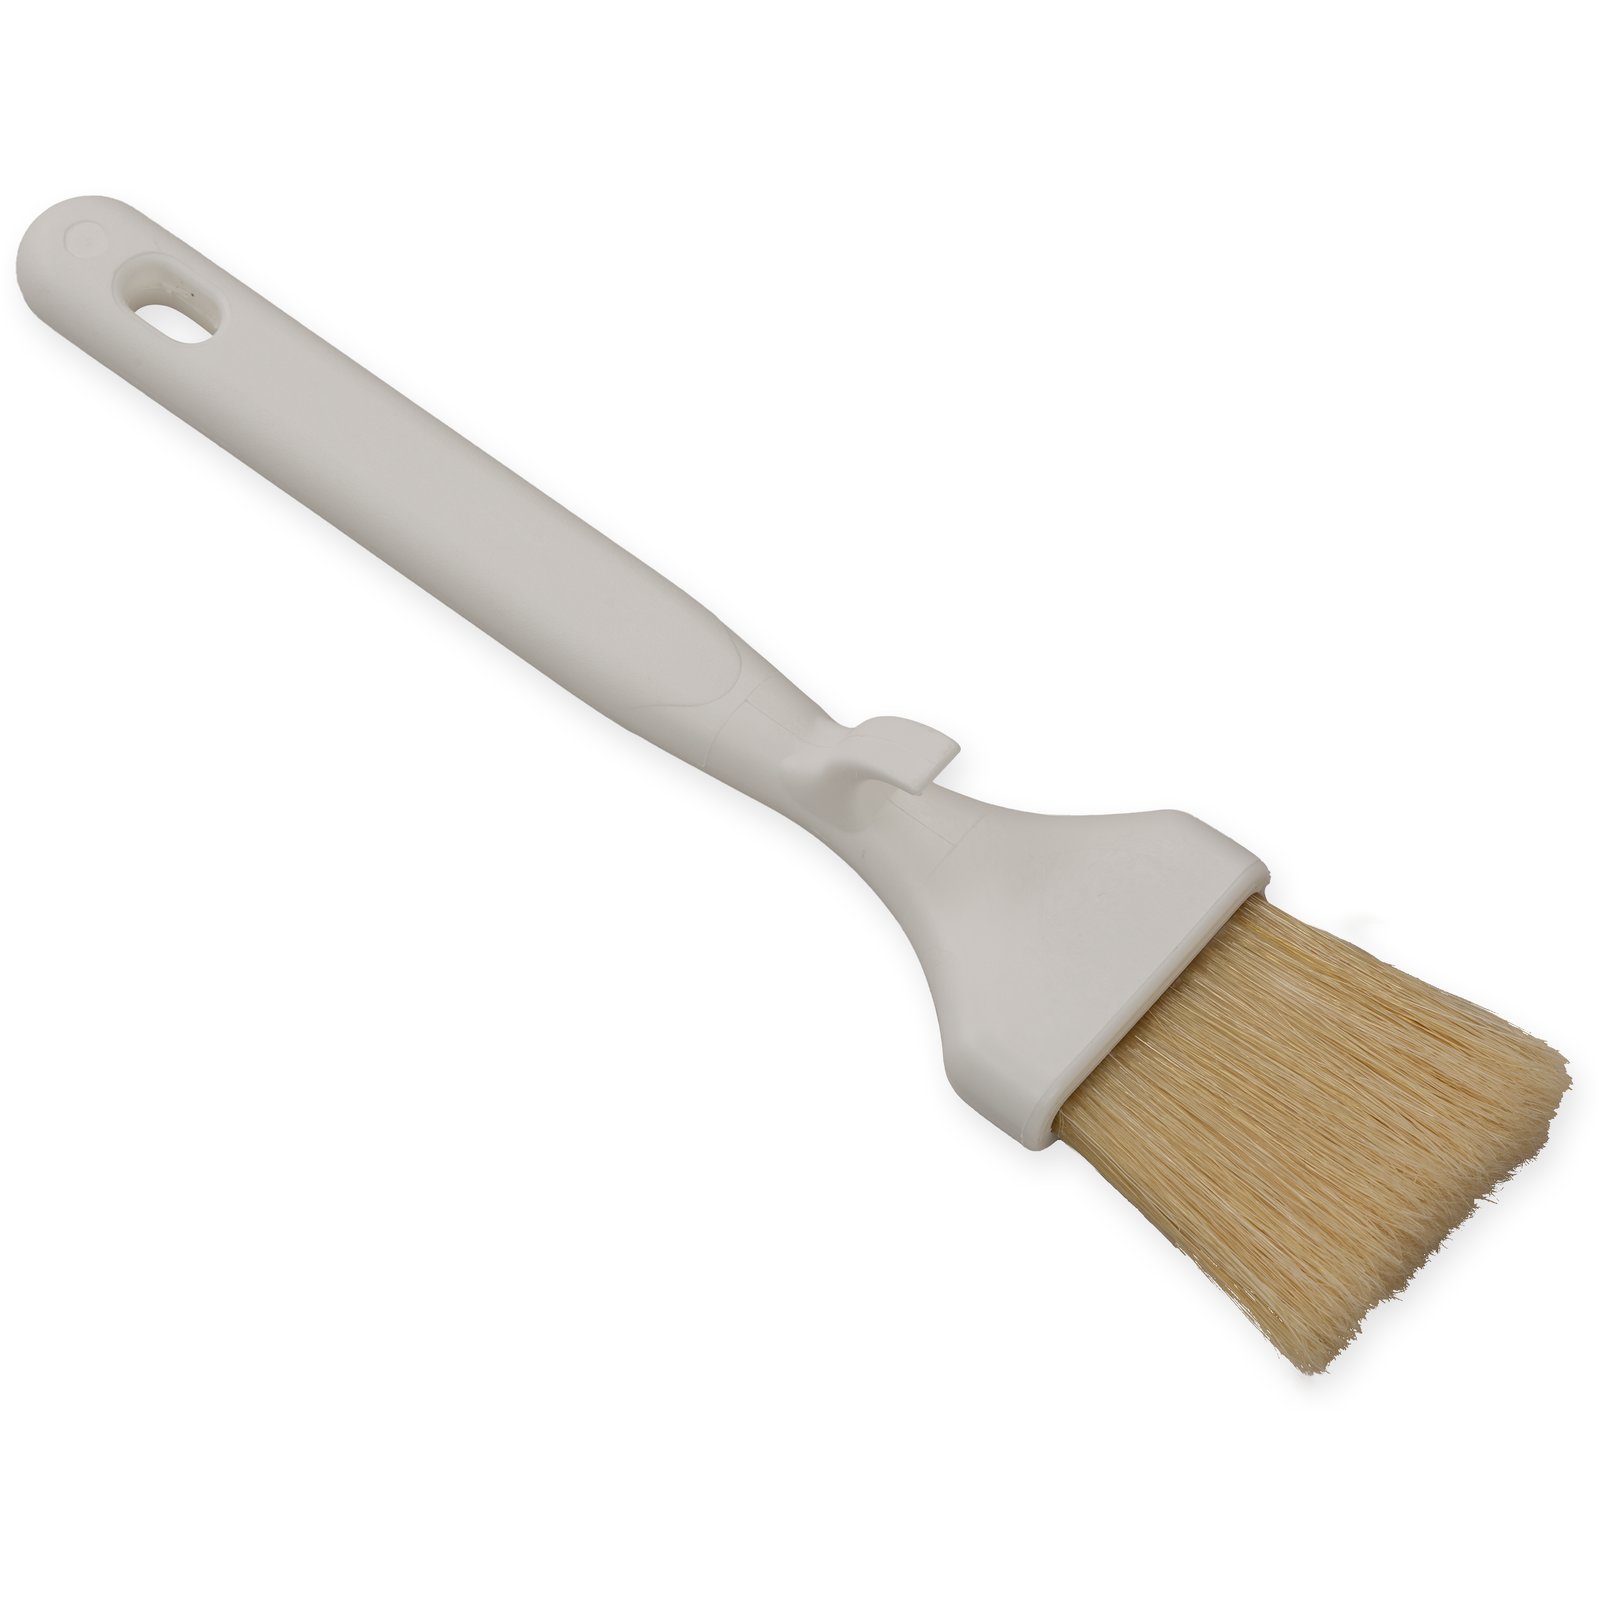 ProTool Brush for Window Track (25-502): Hand Held Bristle Brushes